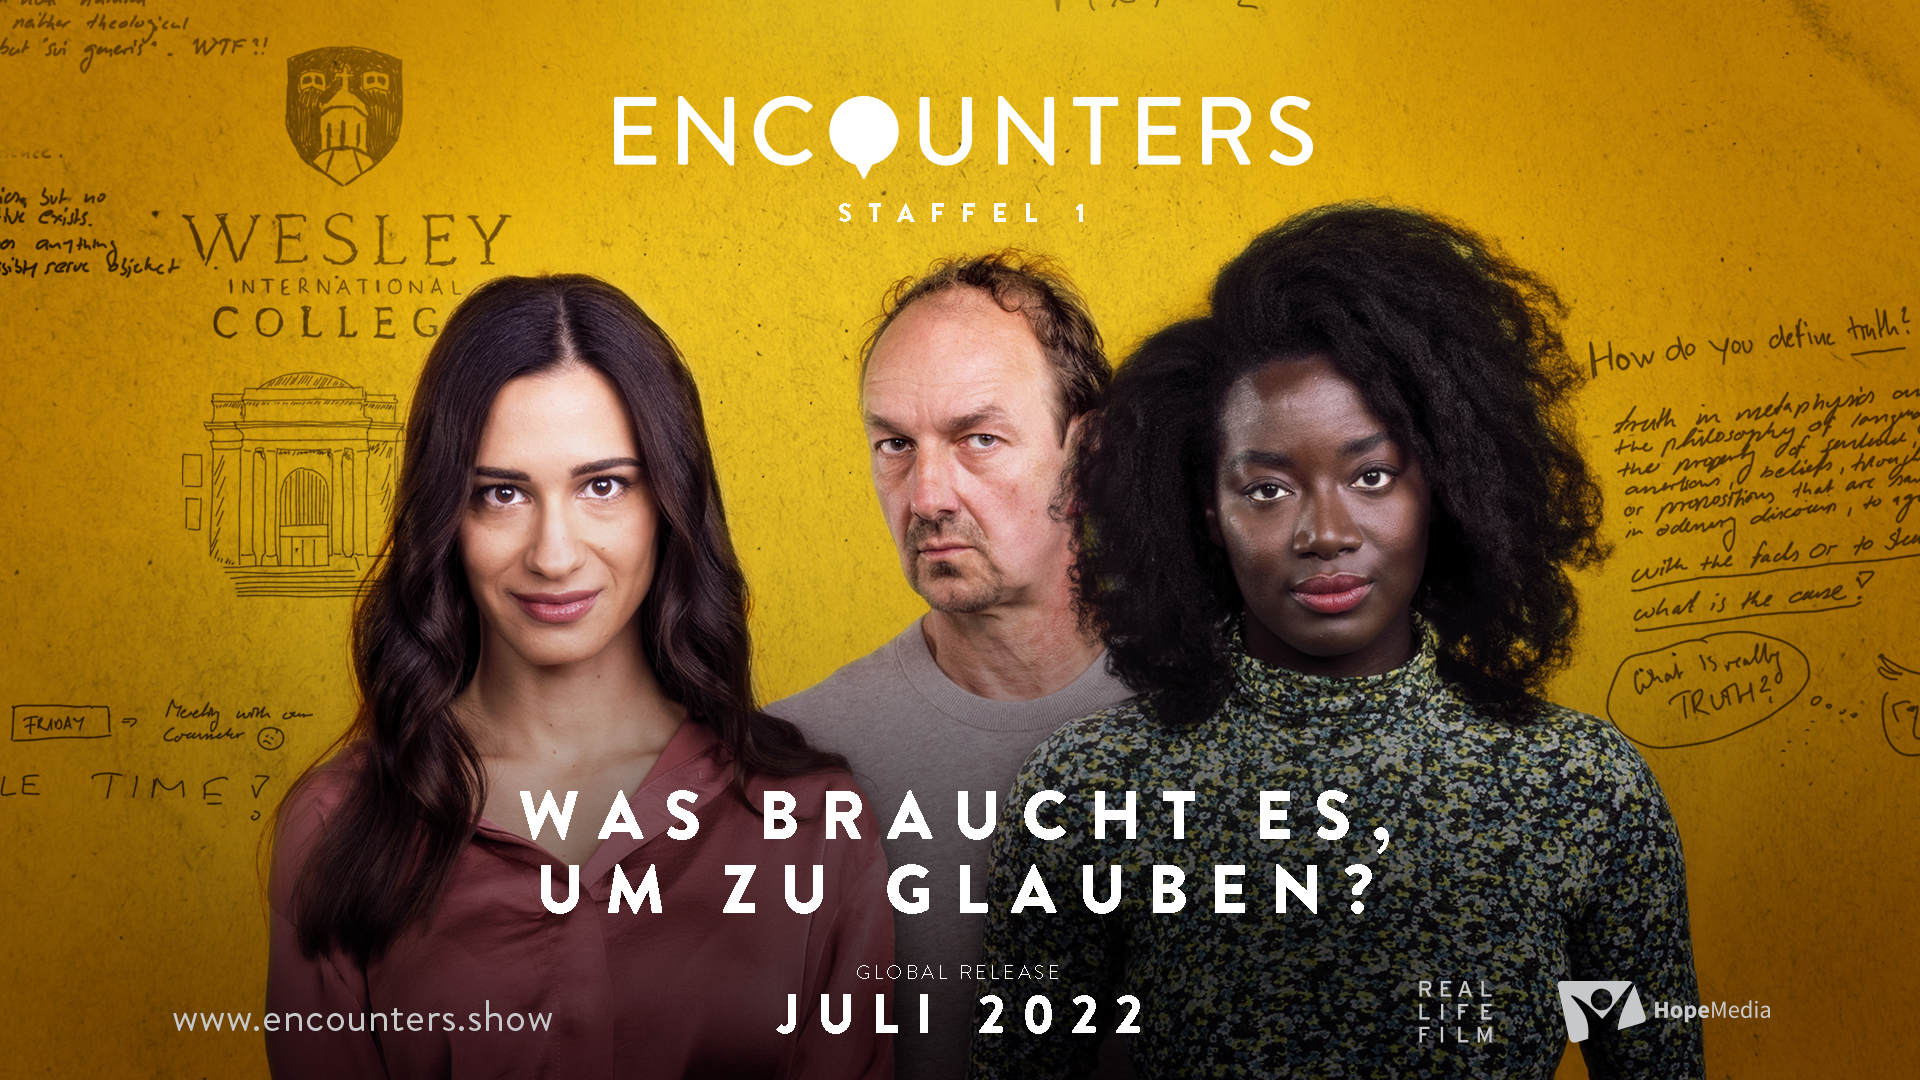 Premiere der TV-Serie "Encounters"